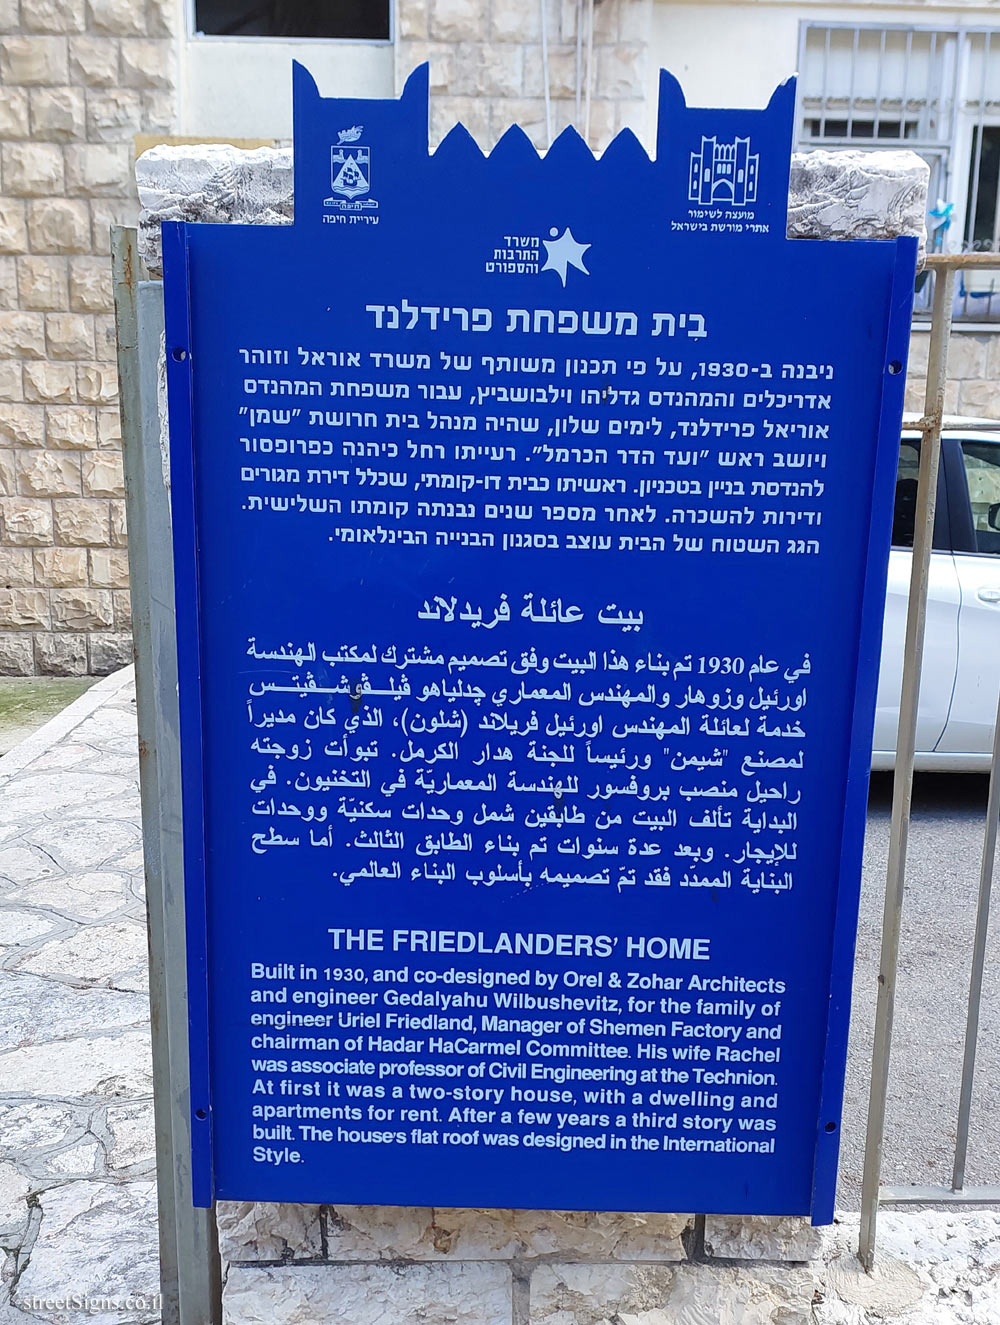 Haifa - Heritage Sites in Israel - The Friedlanders’ Home